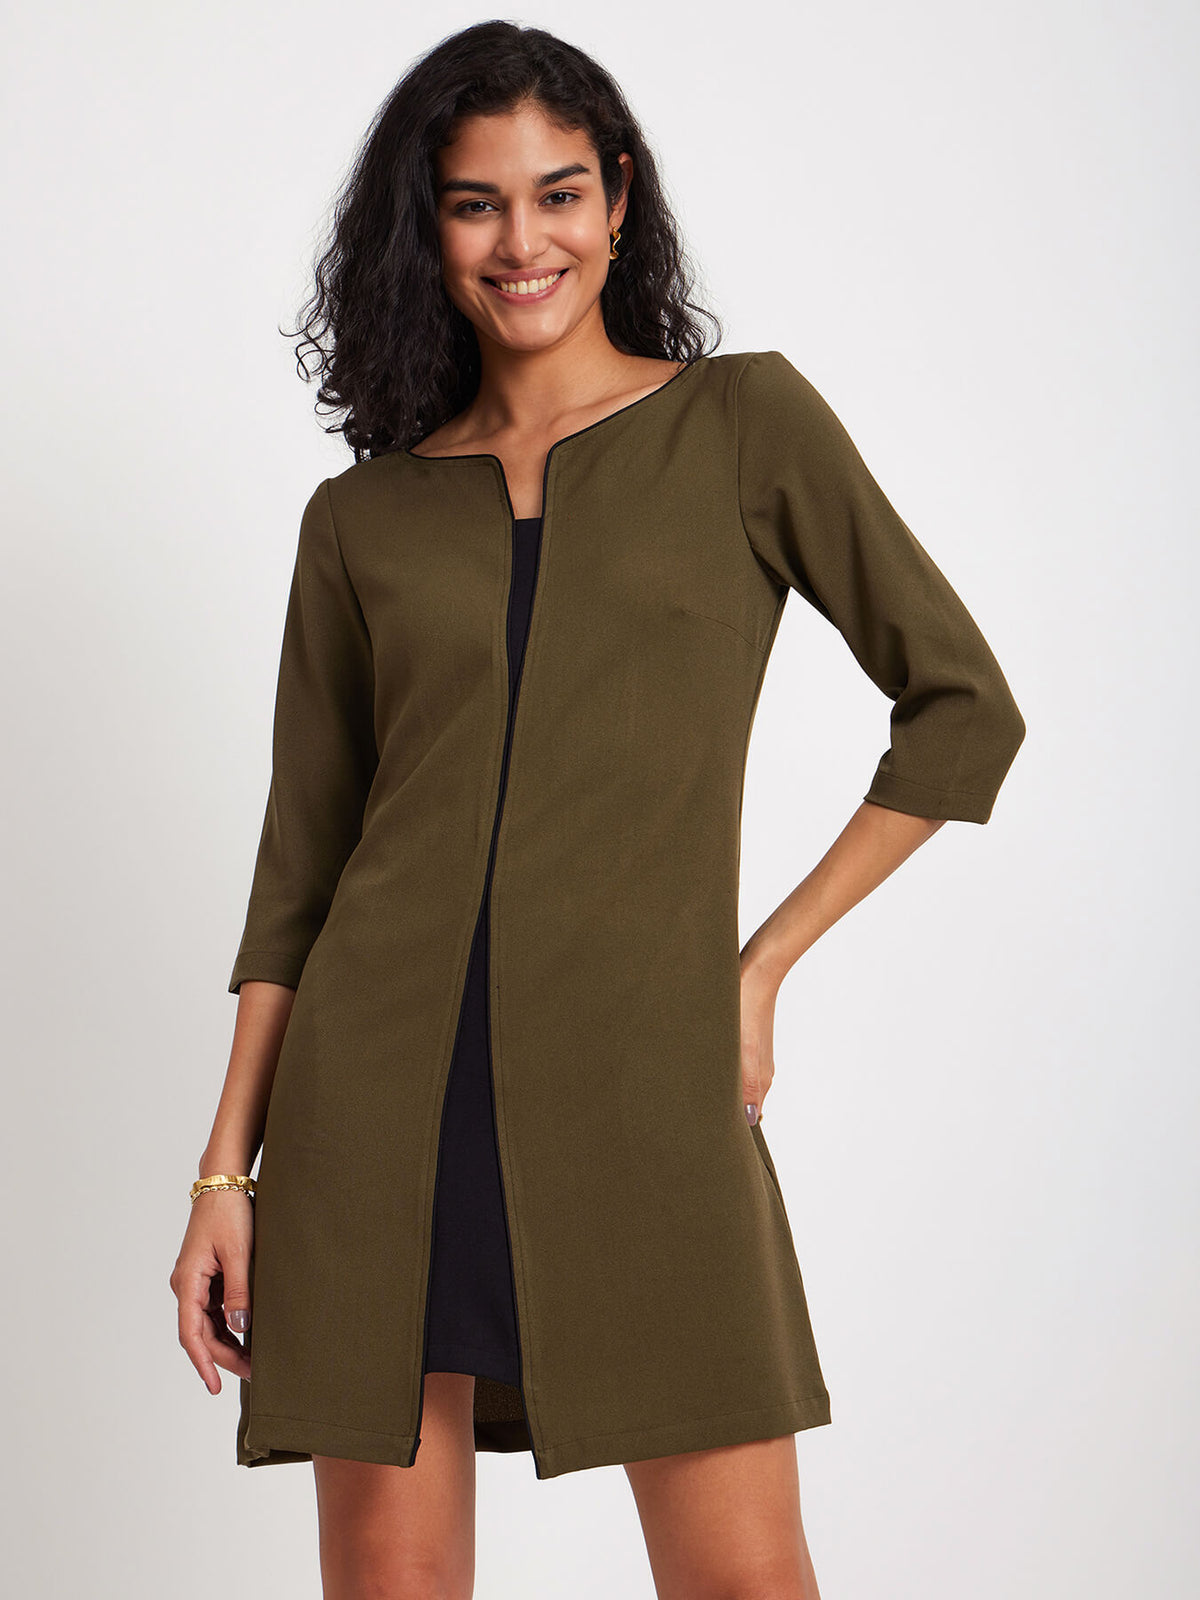 Colour Block A-Line Dress - Olive Green